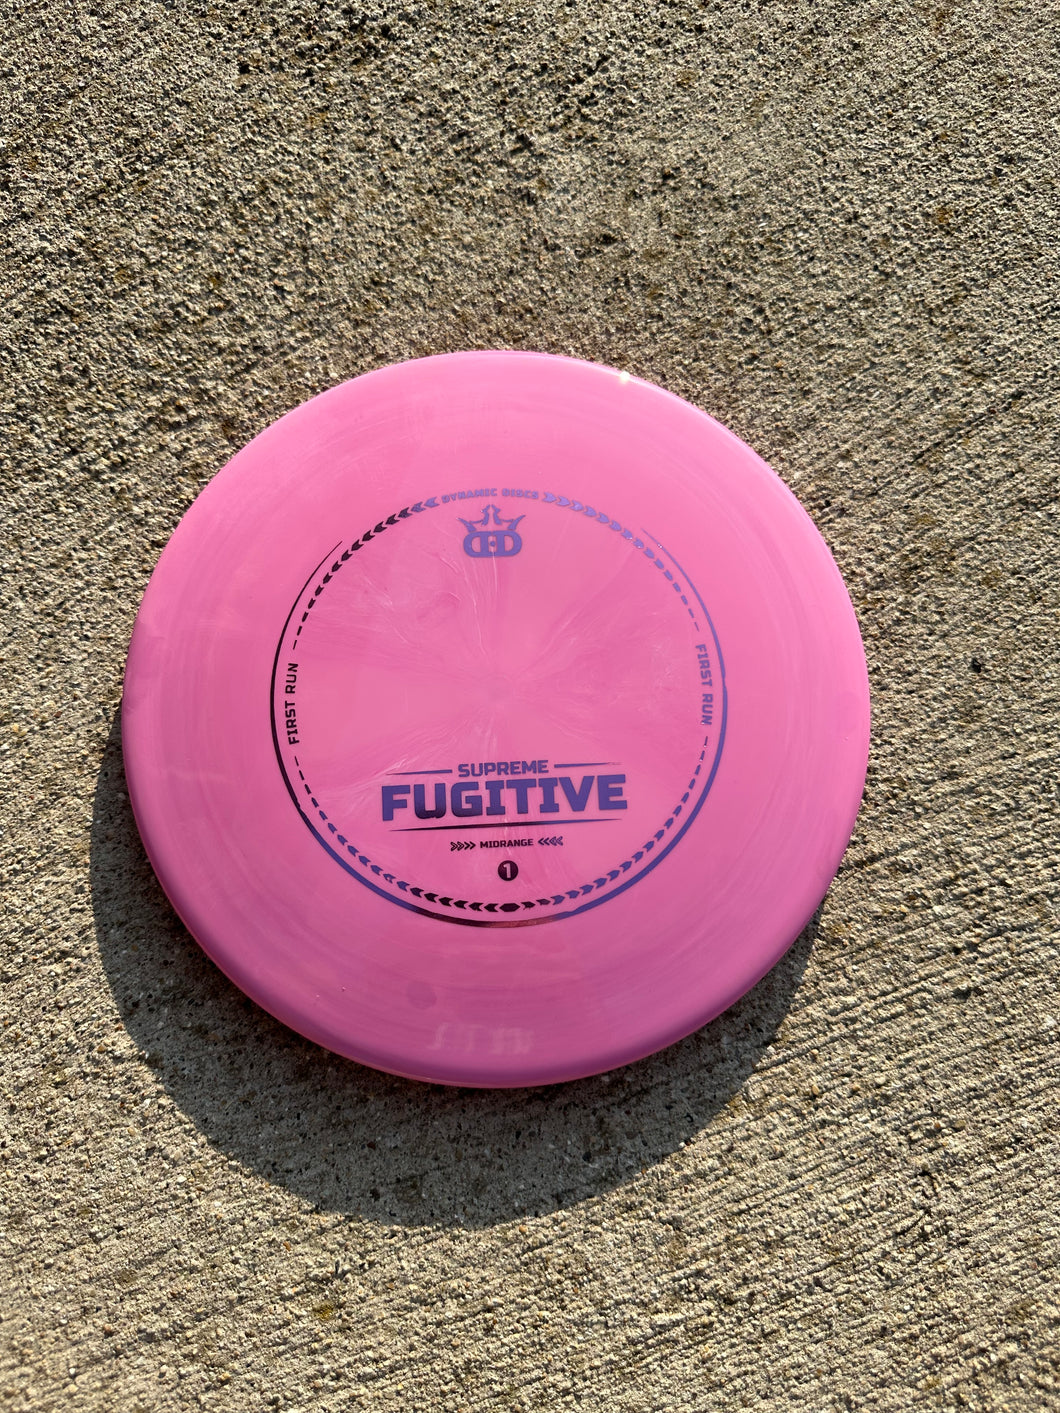 Dynamic Discs Fugitive Midrange 174 pink